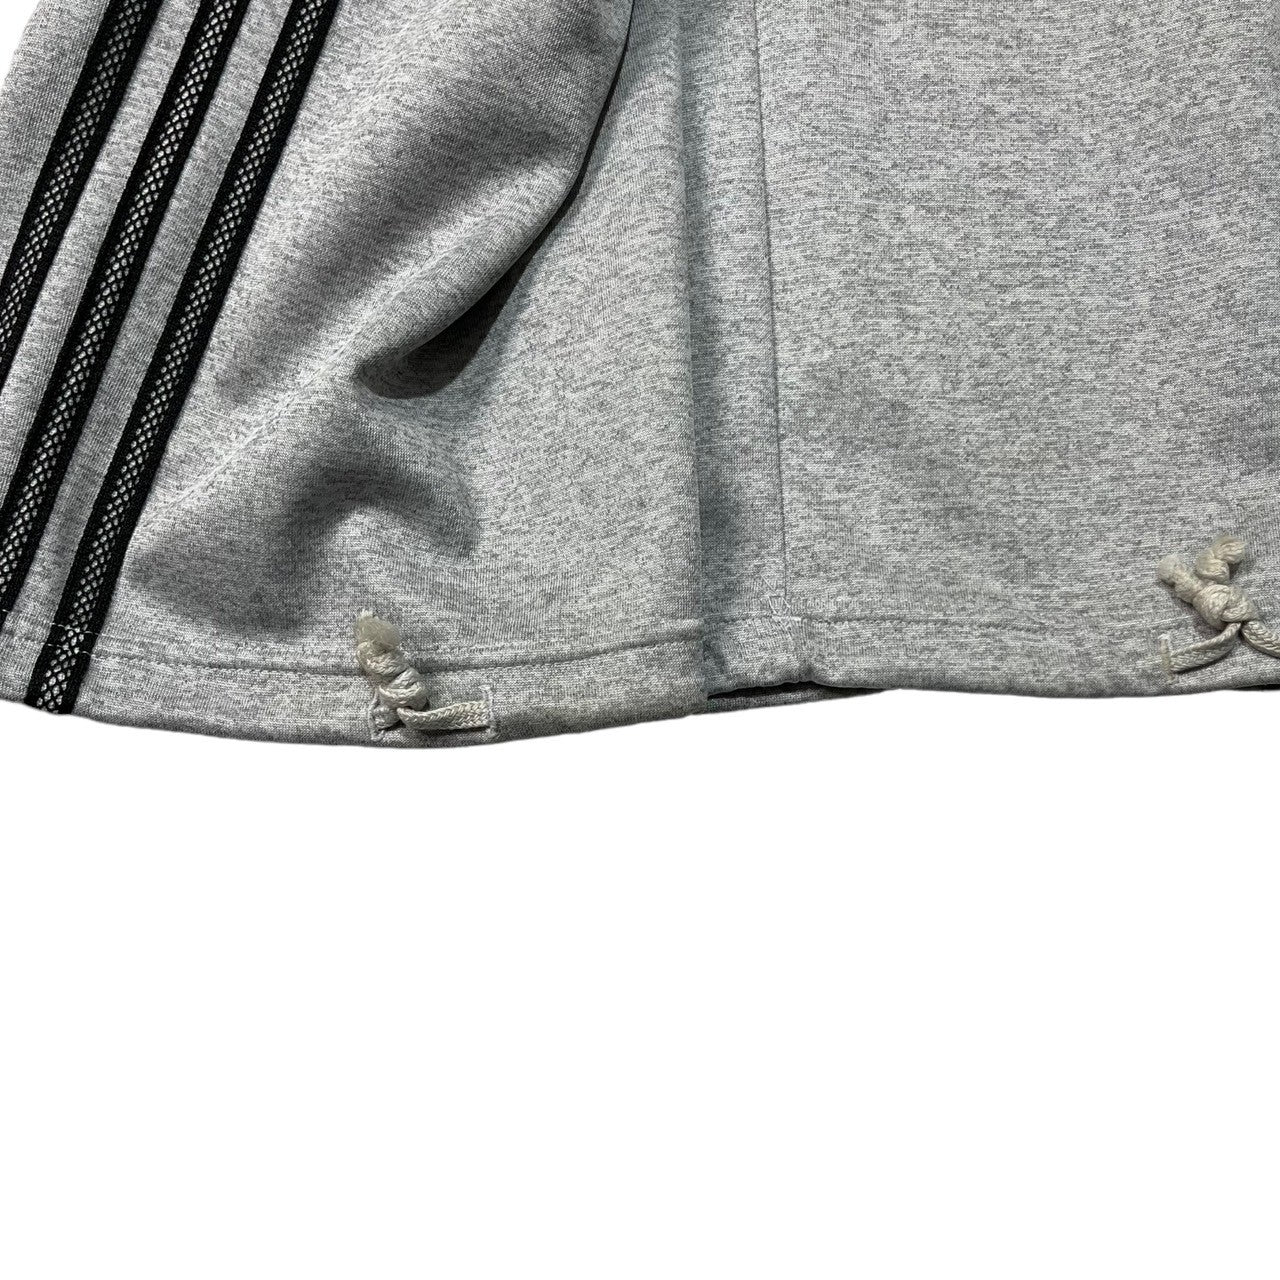 adidas(アディダス) 00's 3line wide trcuk pants 3本ライン ワイド トラックパンツ ジャージ SIZE  記載無し(FREE) グレー×ブラック 万国旗タグ